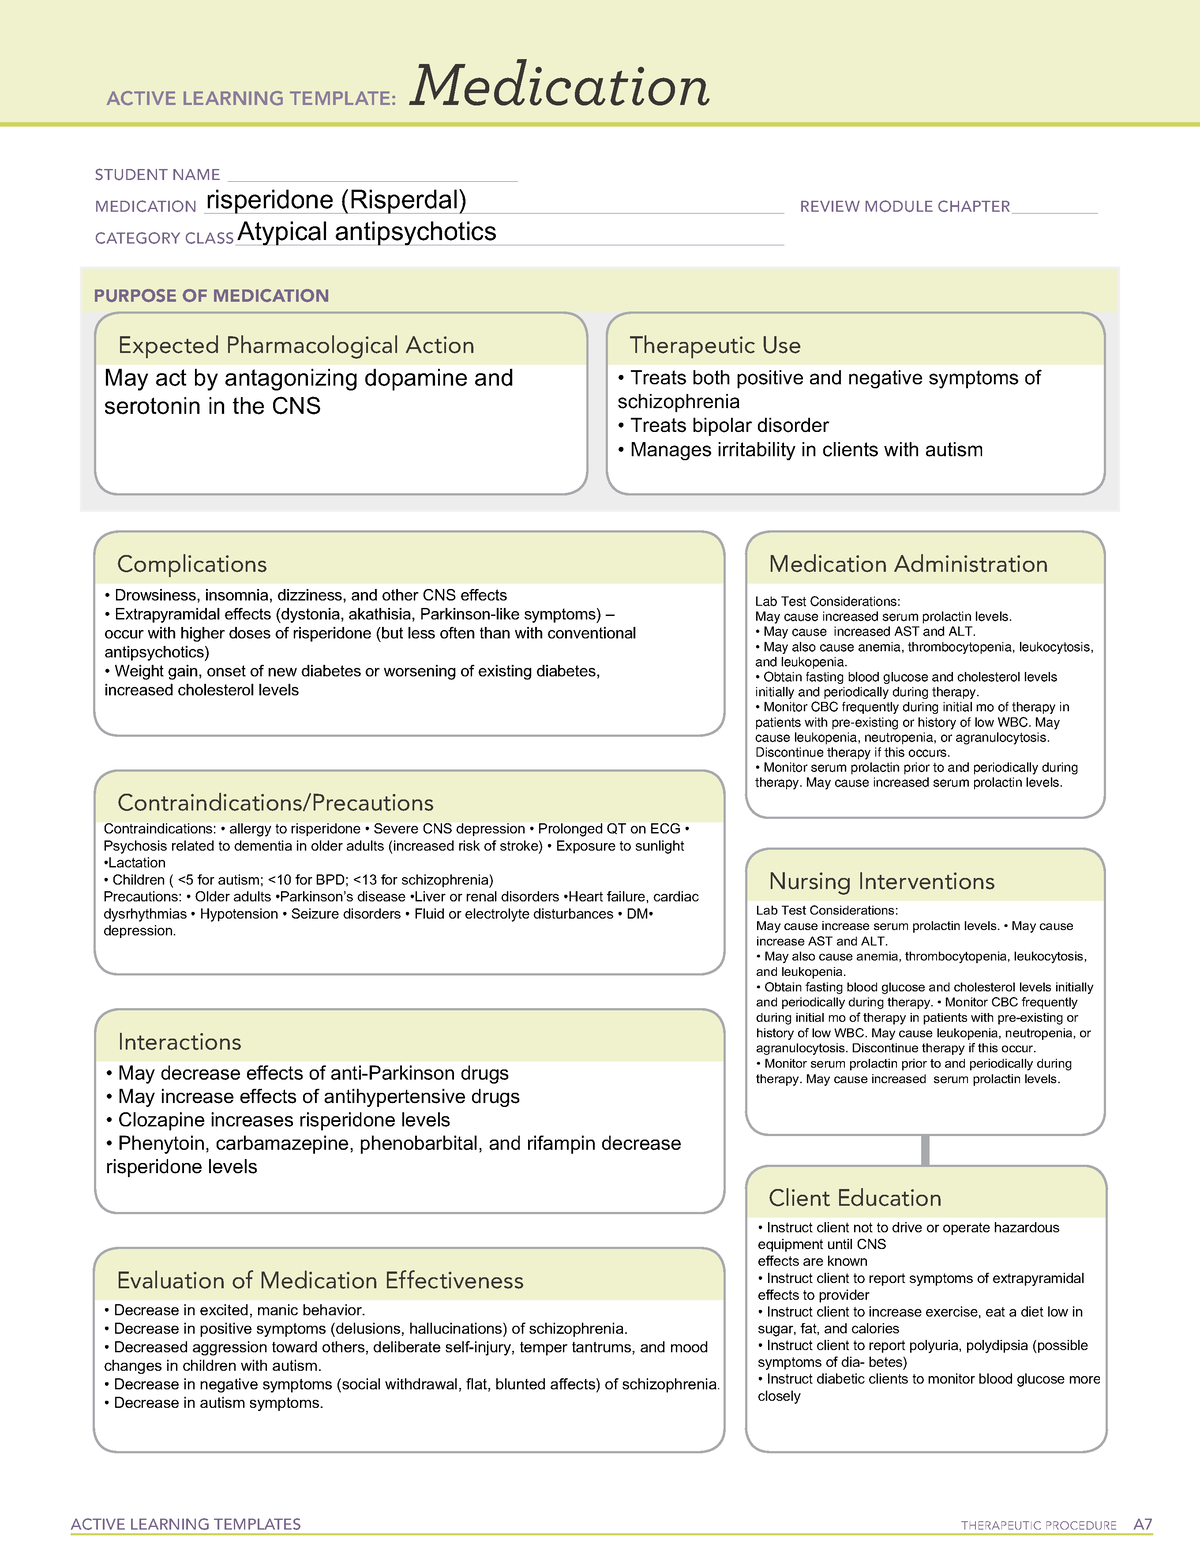 risperidone-risperdal-medication-ati-template-active-learning-templates-therapeutic